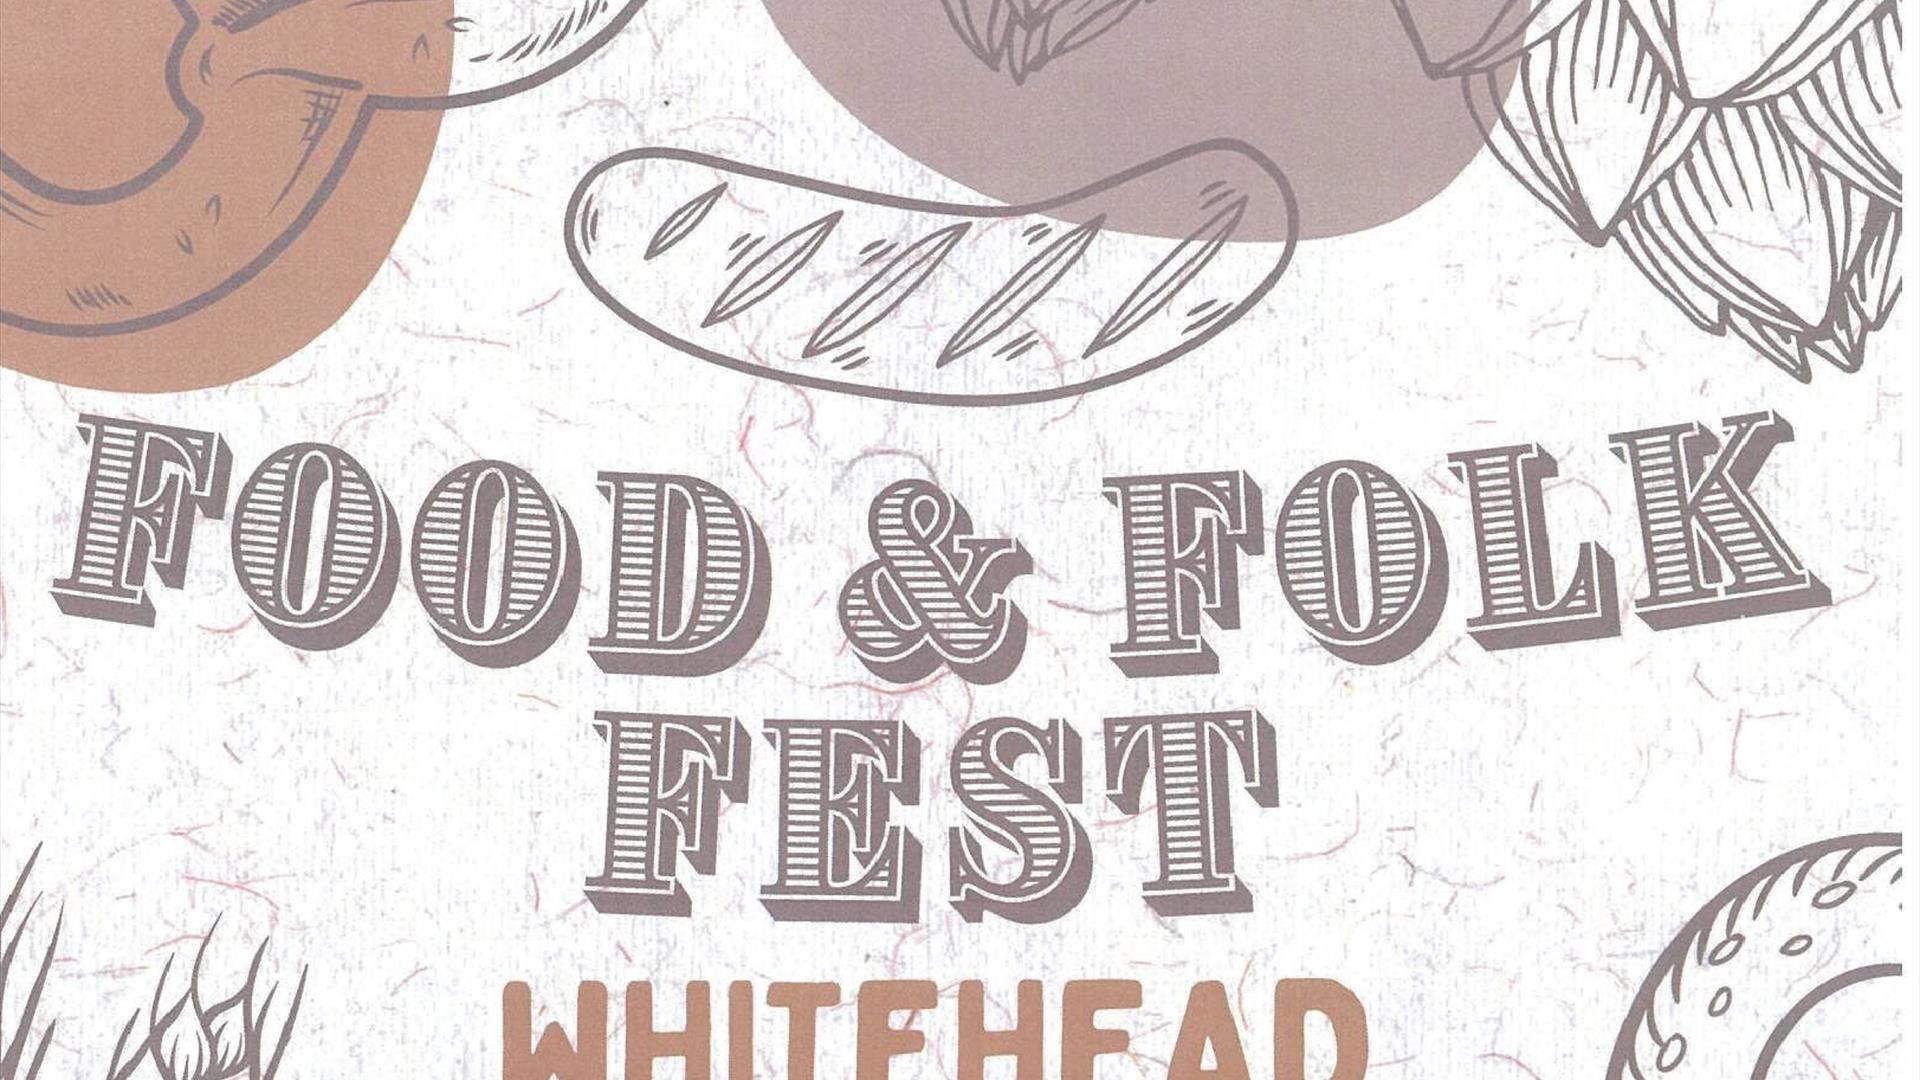 Notice with food illustrations stating Food & Folk Fest Whitehead